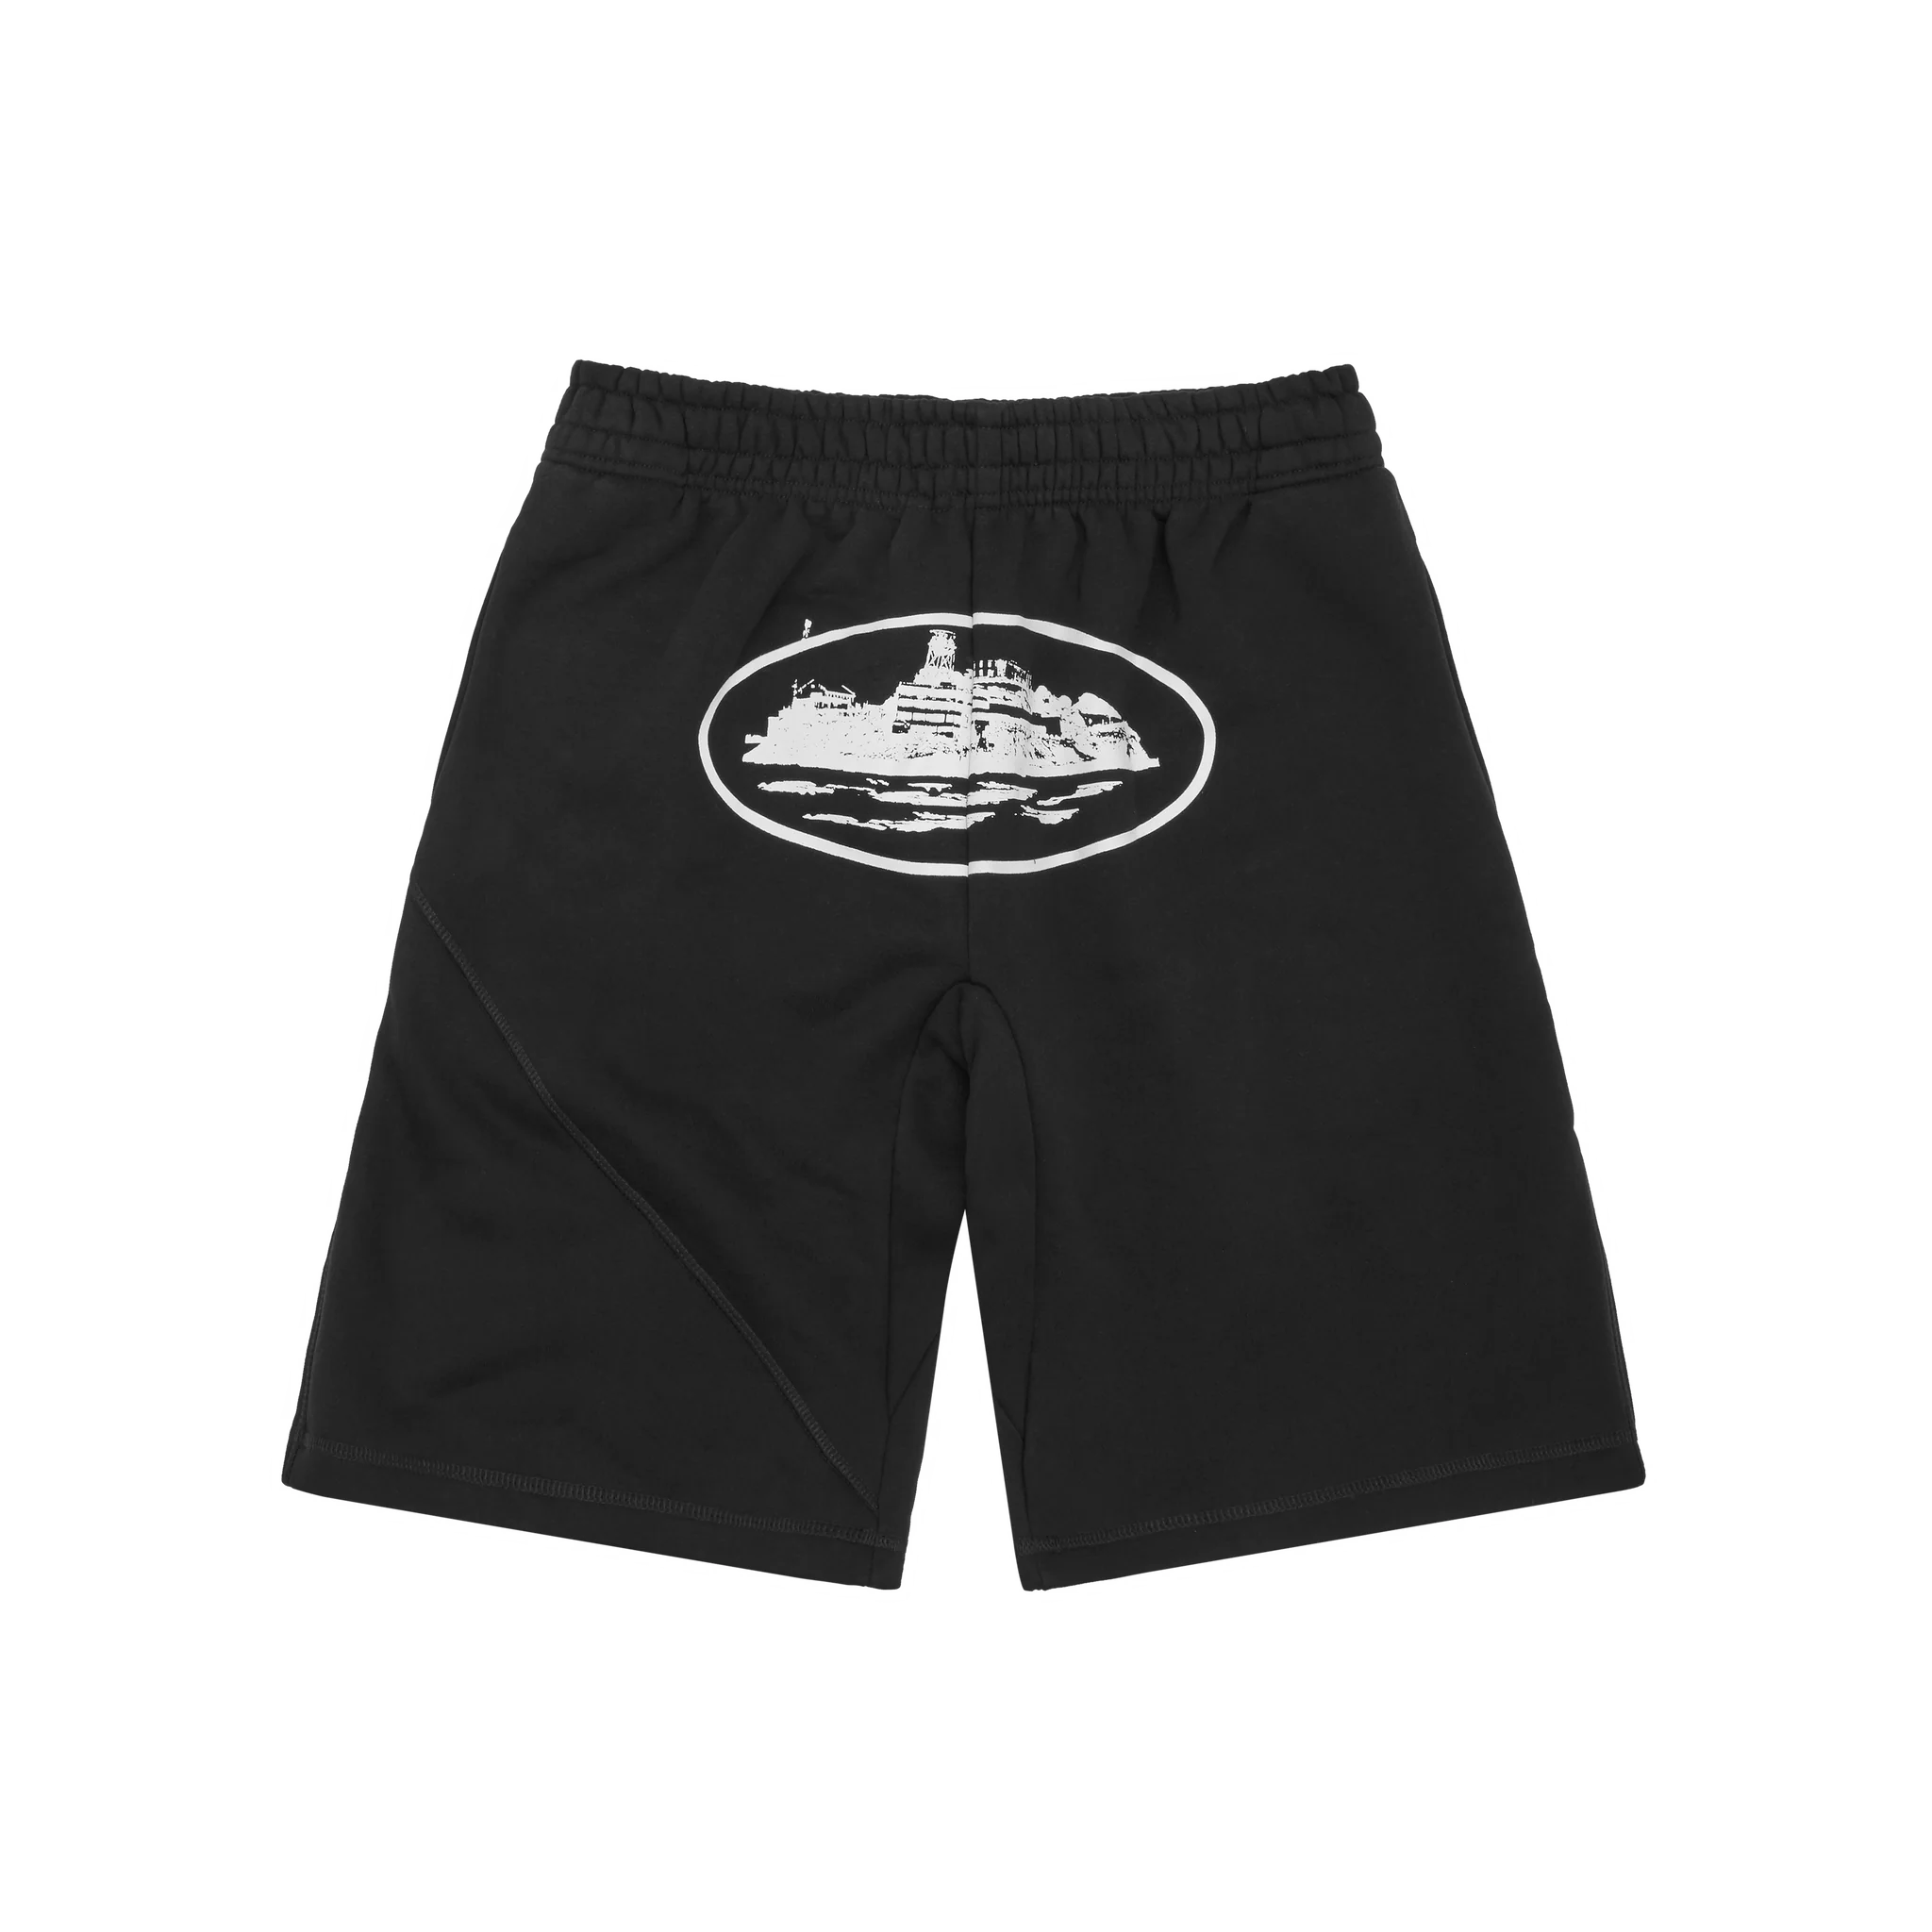 Black and White Alcatraz Logo shorts